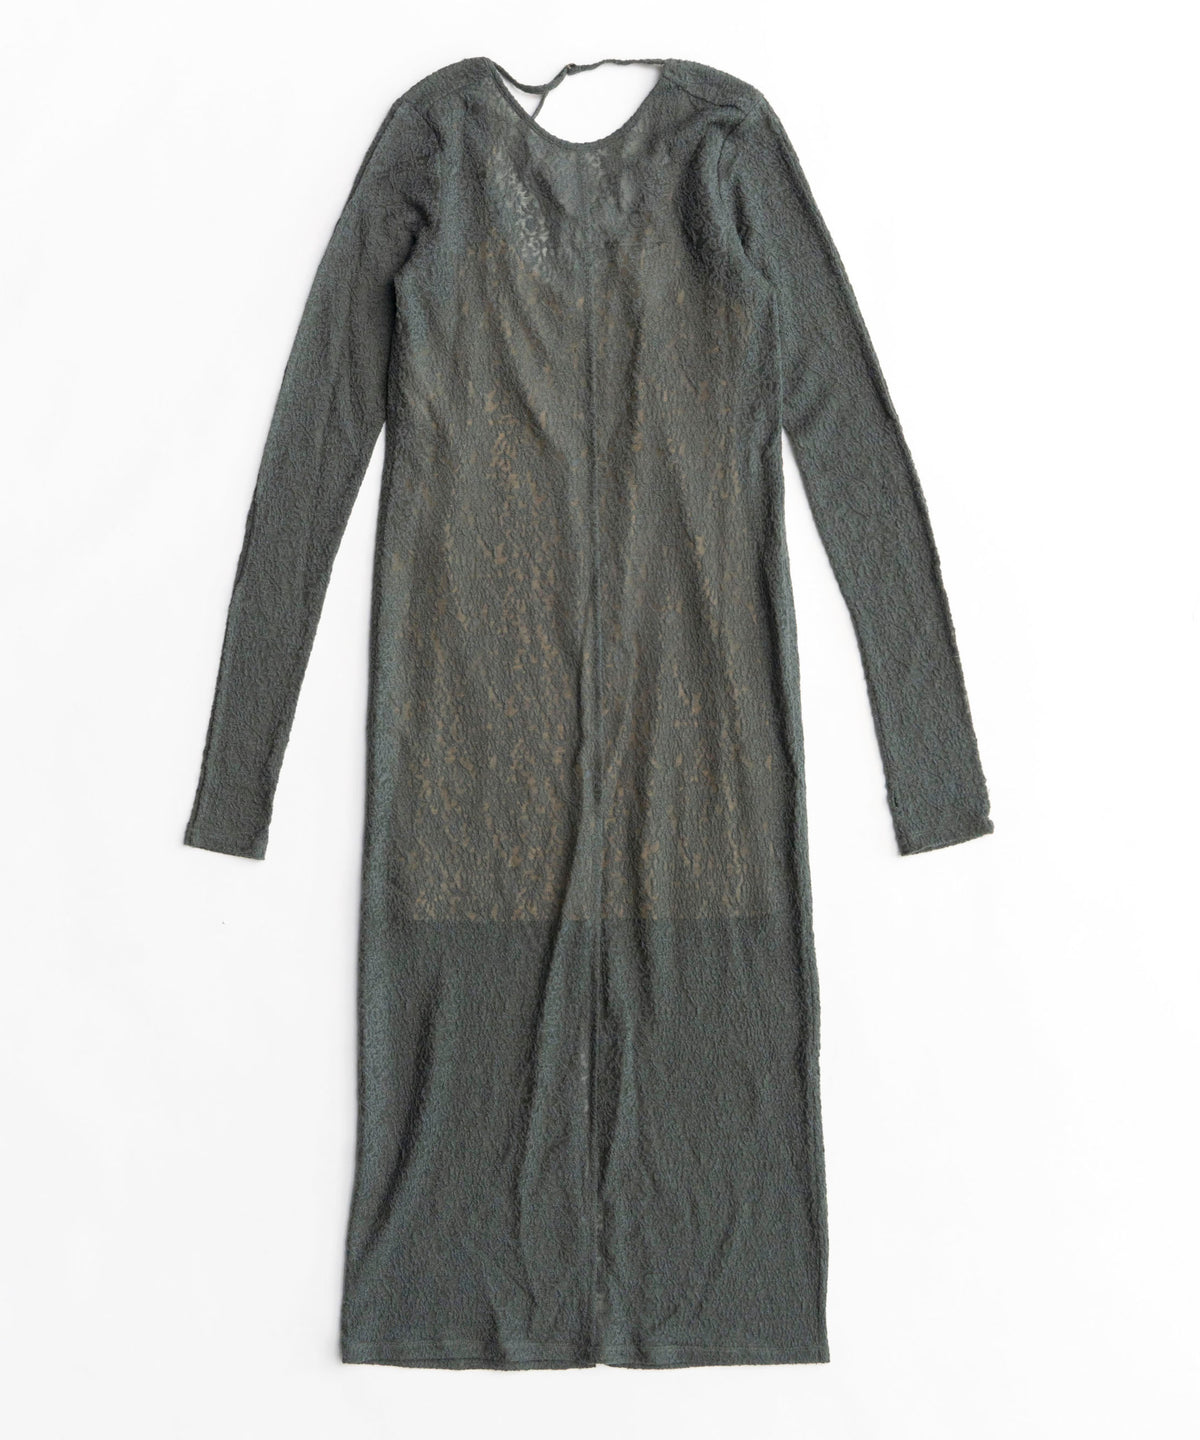 【SALE】Maxi Length Lace One-piece Dress